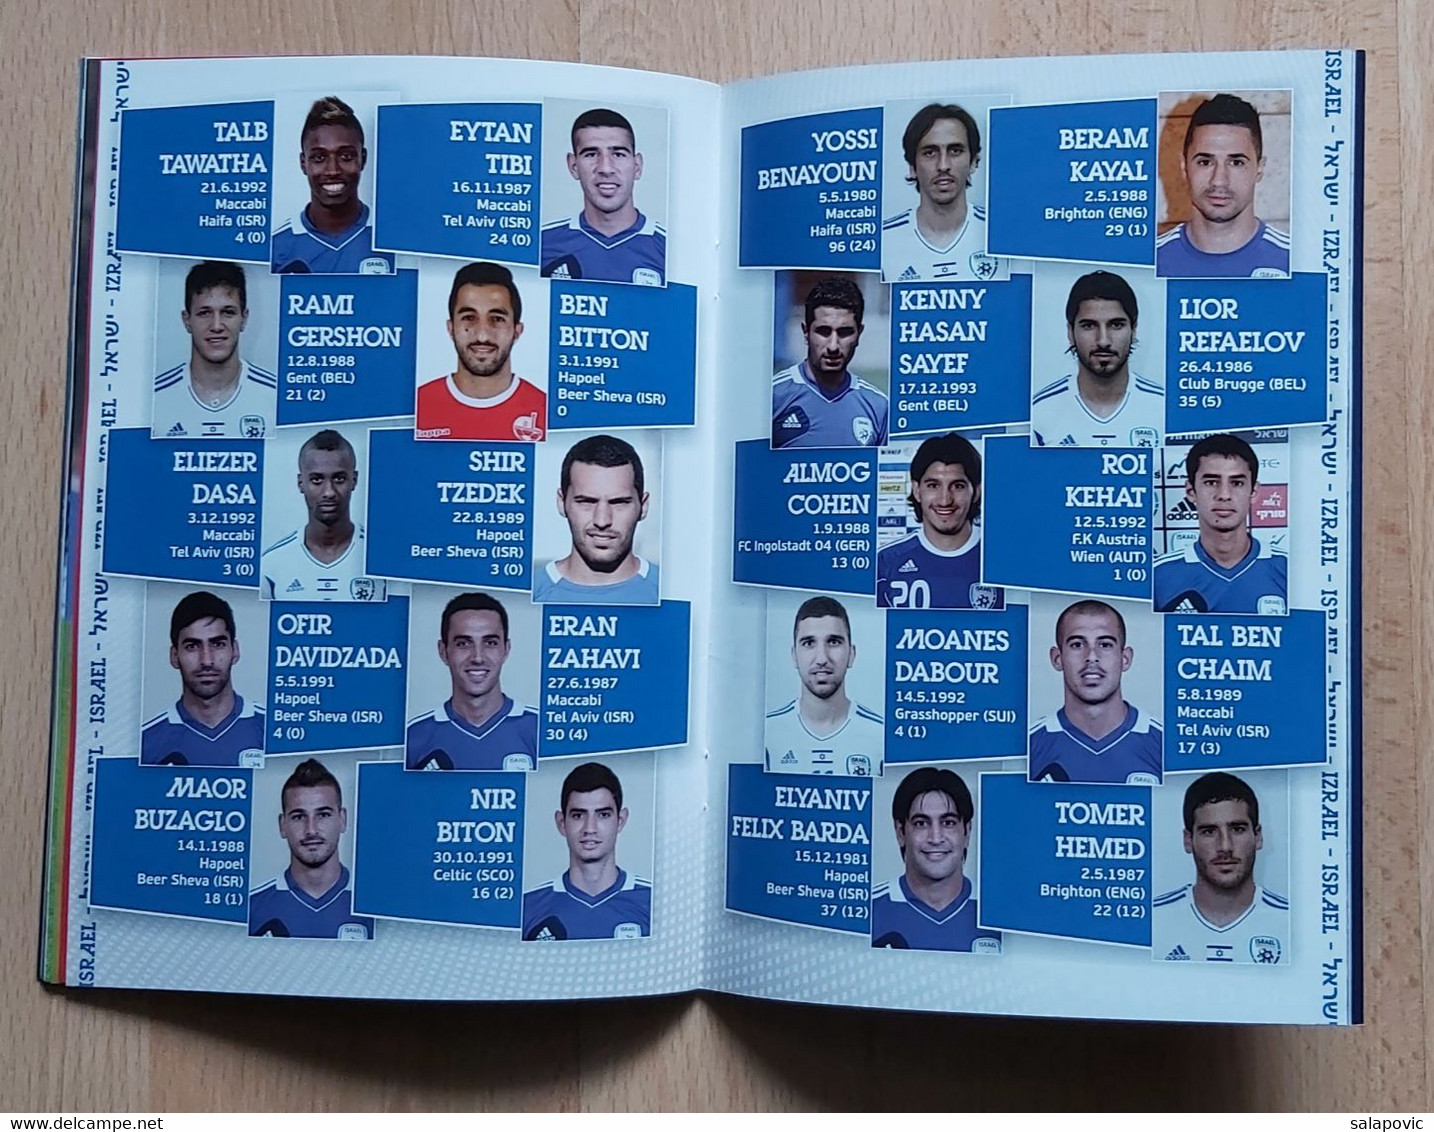 CROATIA Vs ISRAEL - 2016. Friendly Football Match   FOOTBALL MATCH PROGRAM - Books